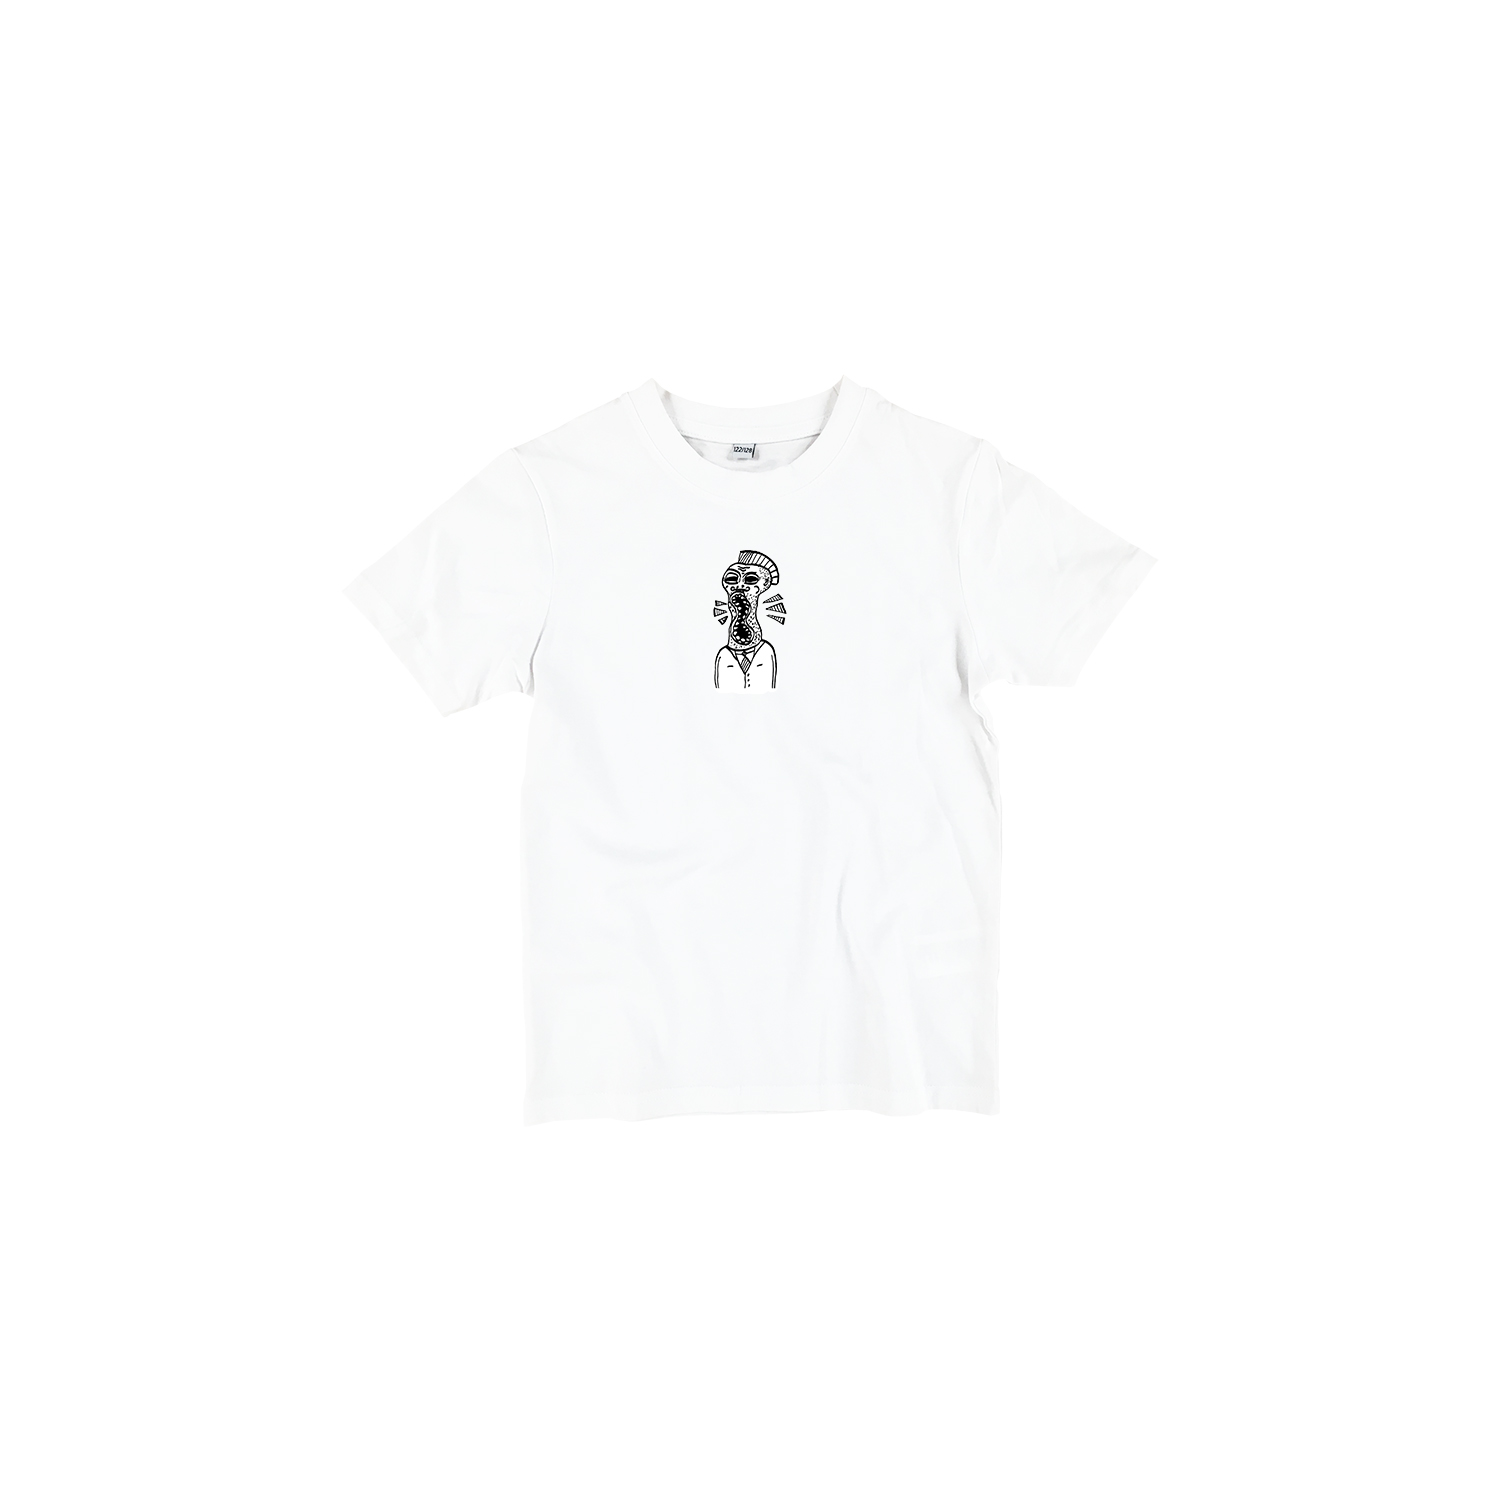 Kids T-shirt - wit - voor - YOURLOOKSDONOTDEFINEME by Wesly van de Rijdt wit - ONE AND ONE MAKES TWO